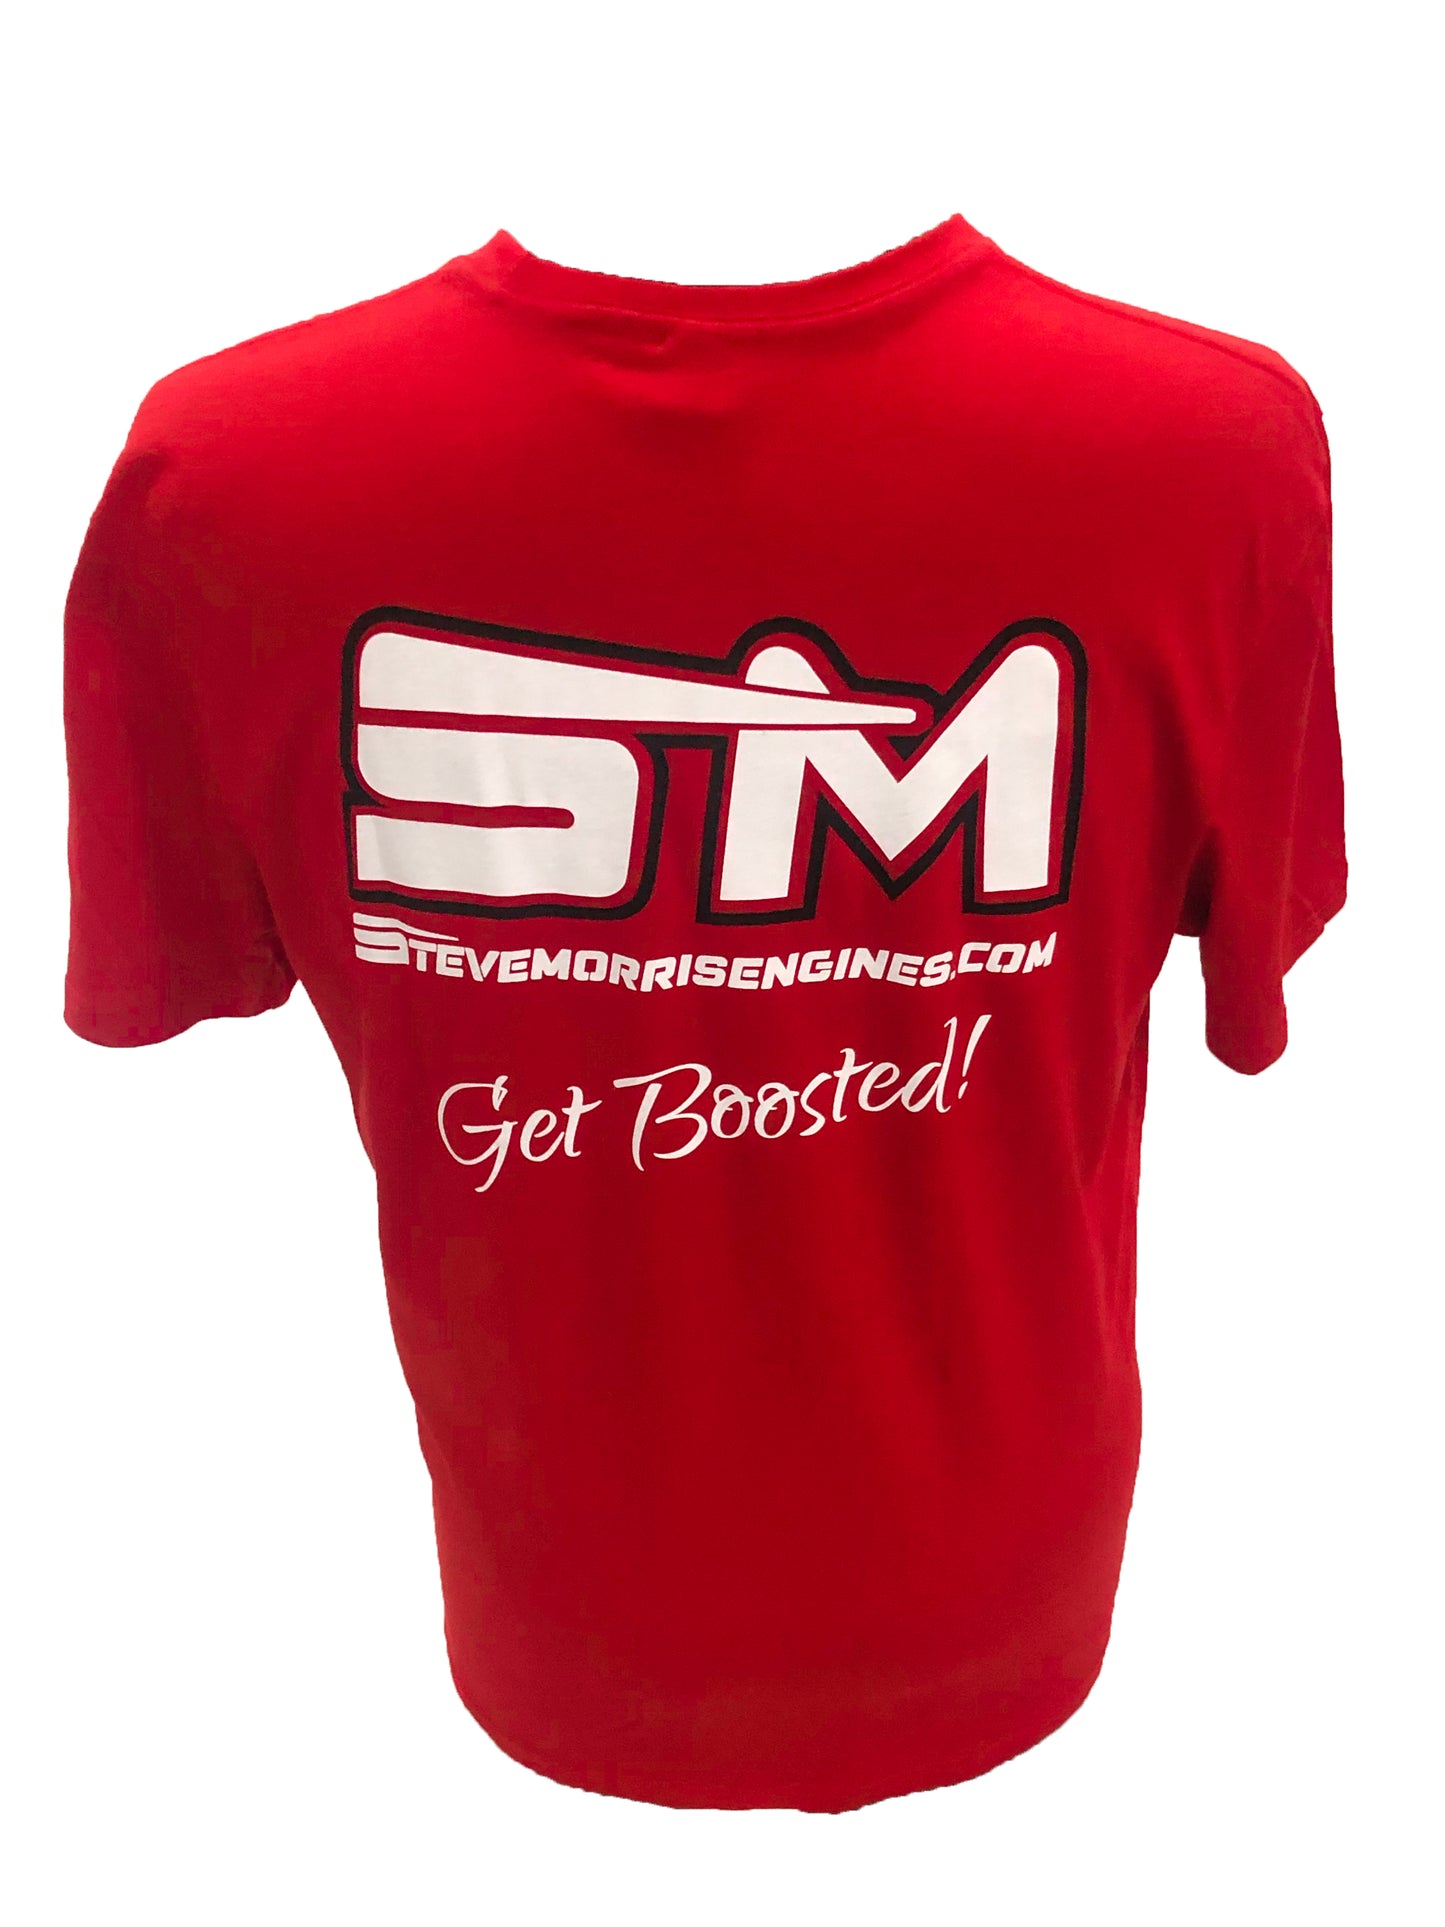 SM Logo T-Shirt - Bright Colors *ON SALE*